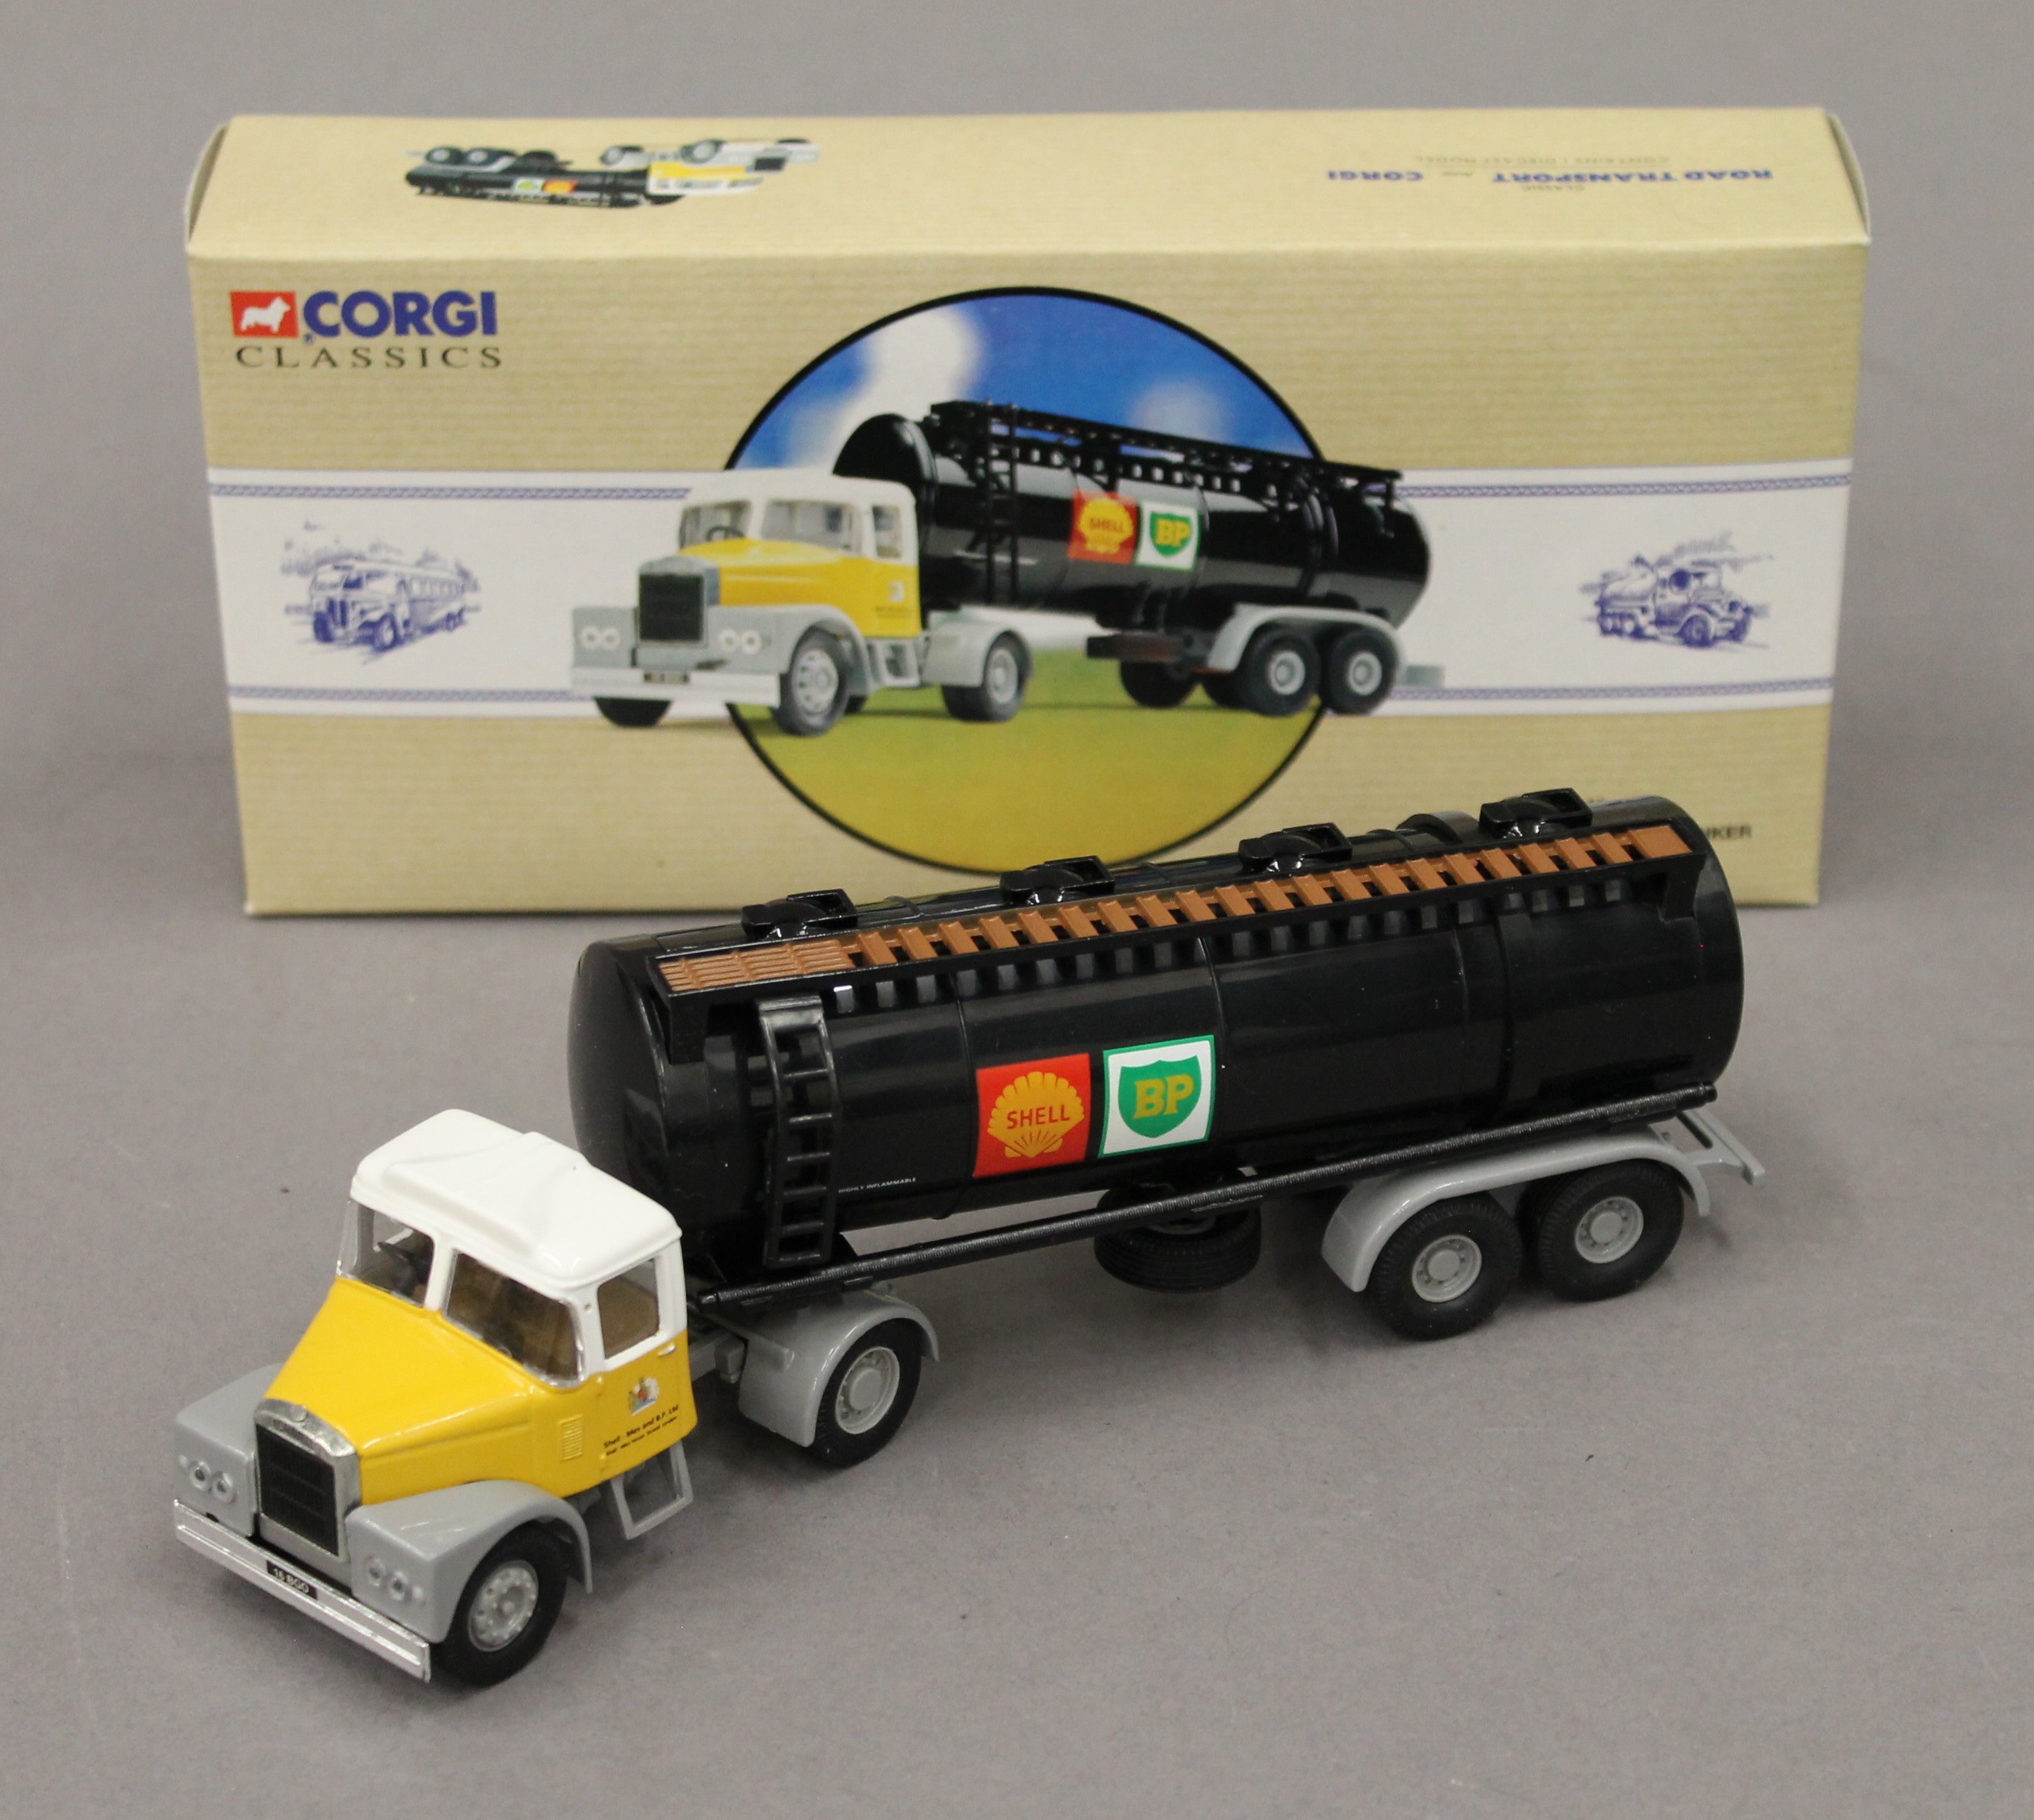 A boxed Corgi Classics Scammell Highway Man Tanker Shell MEX/BP.